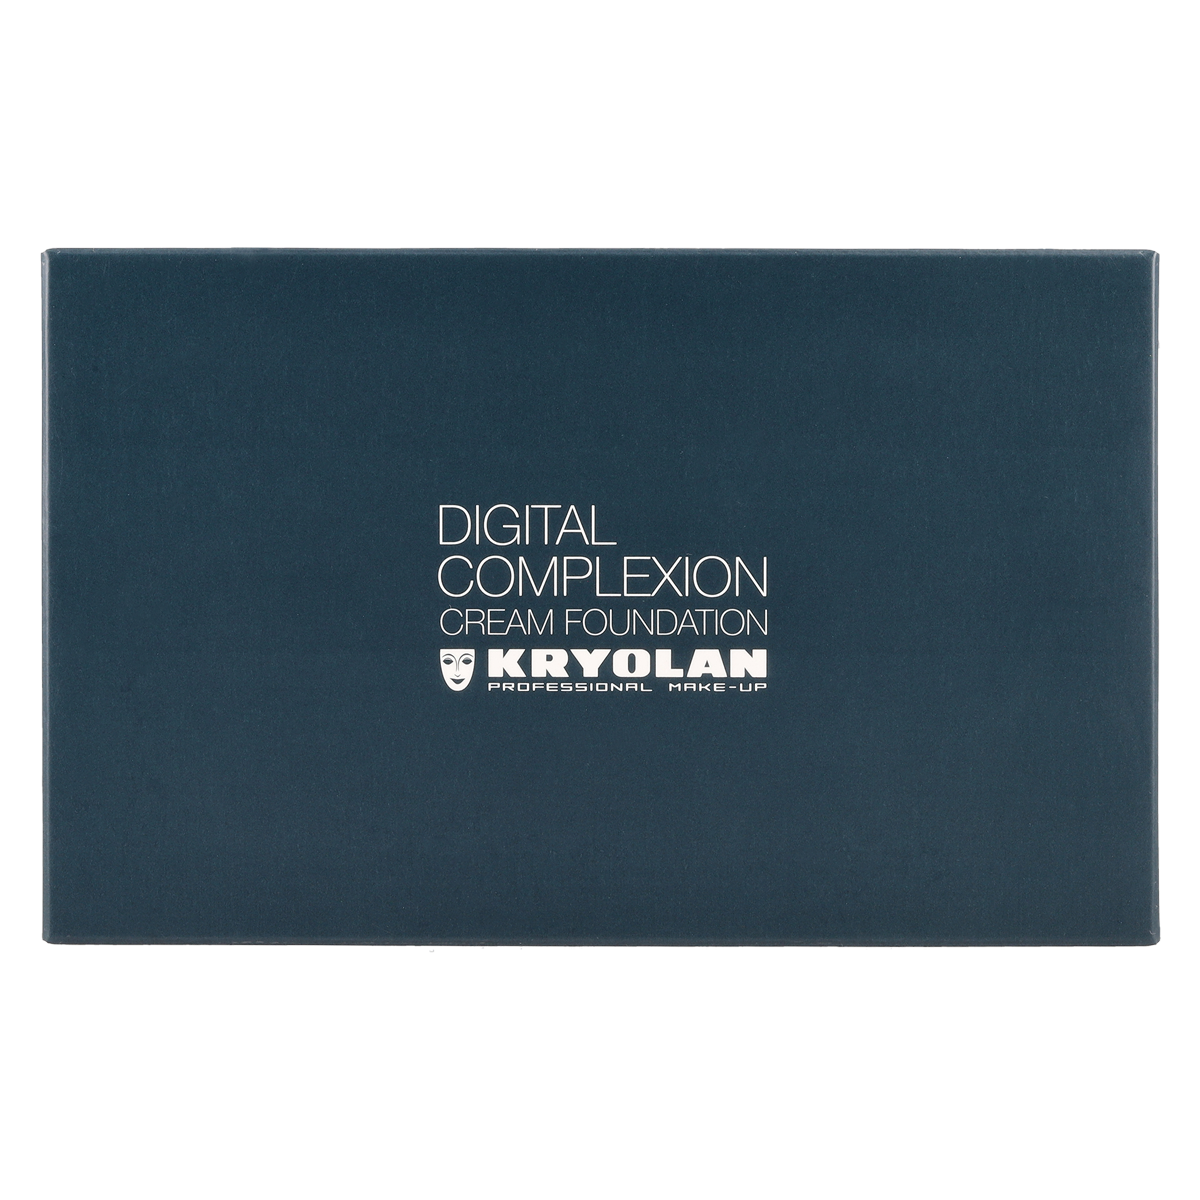 Digital 1 Complexion Cream Foundation